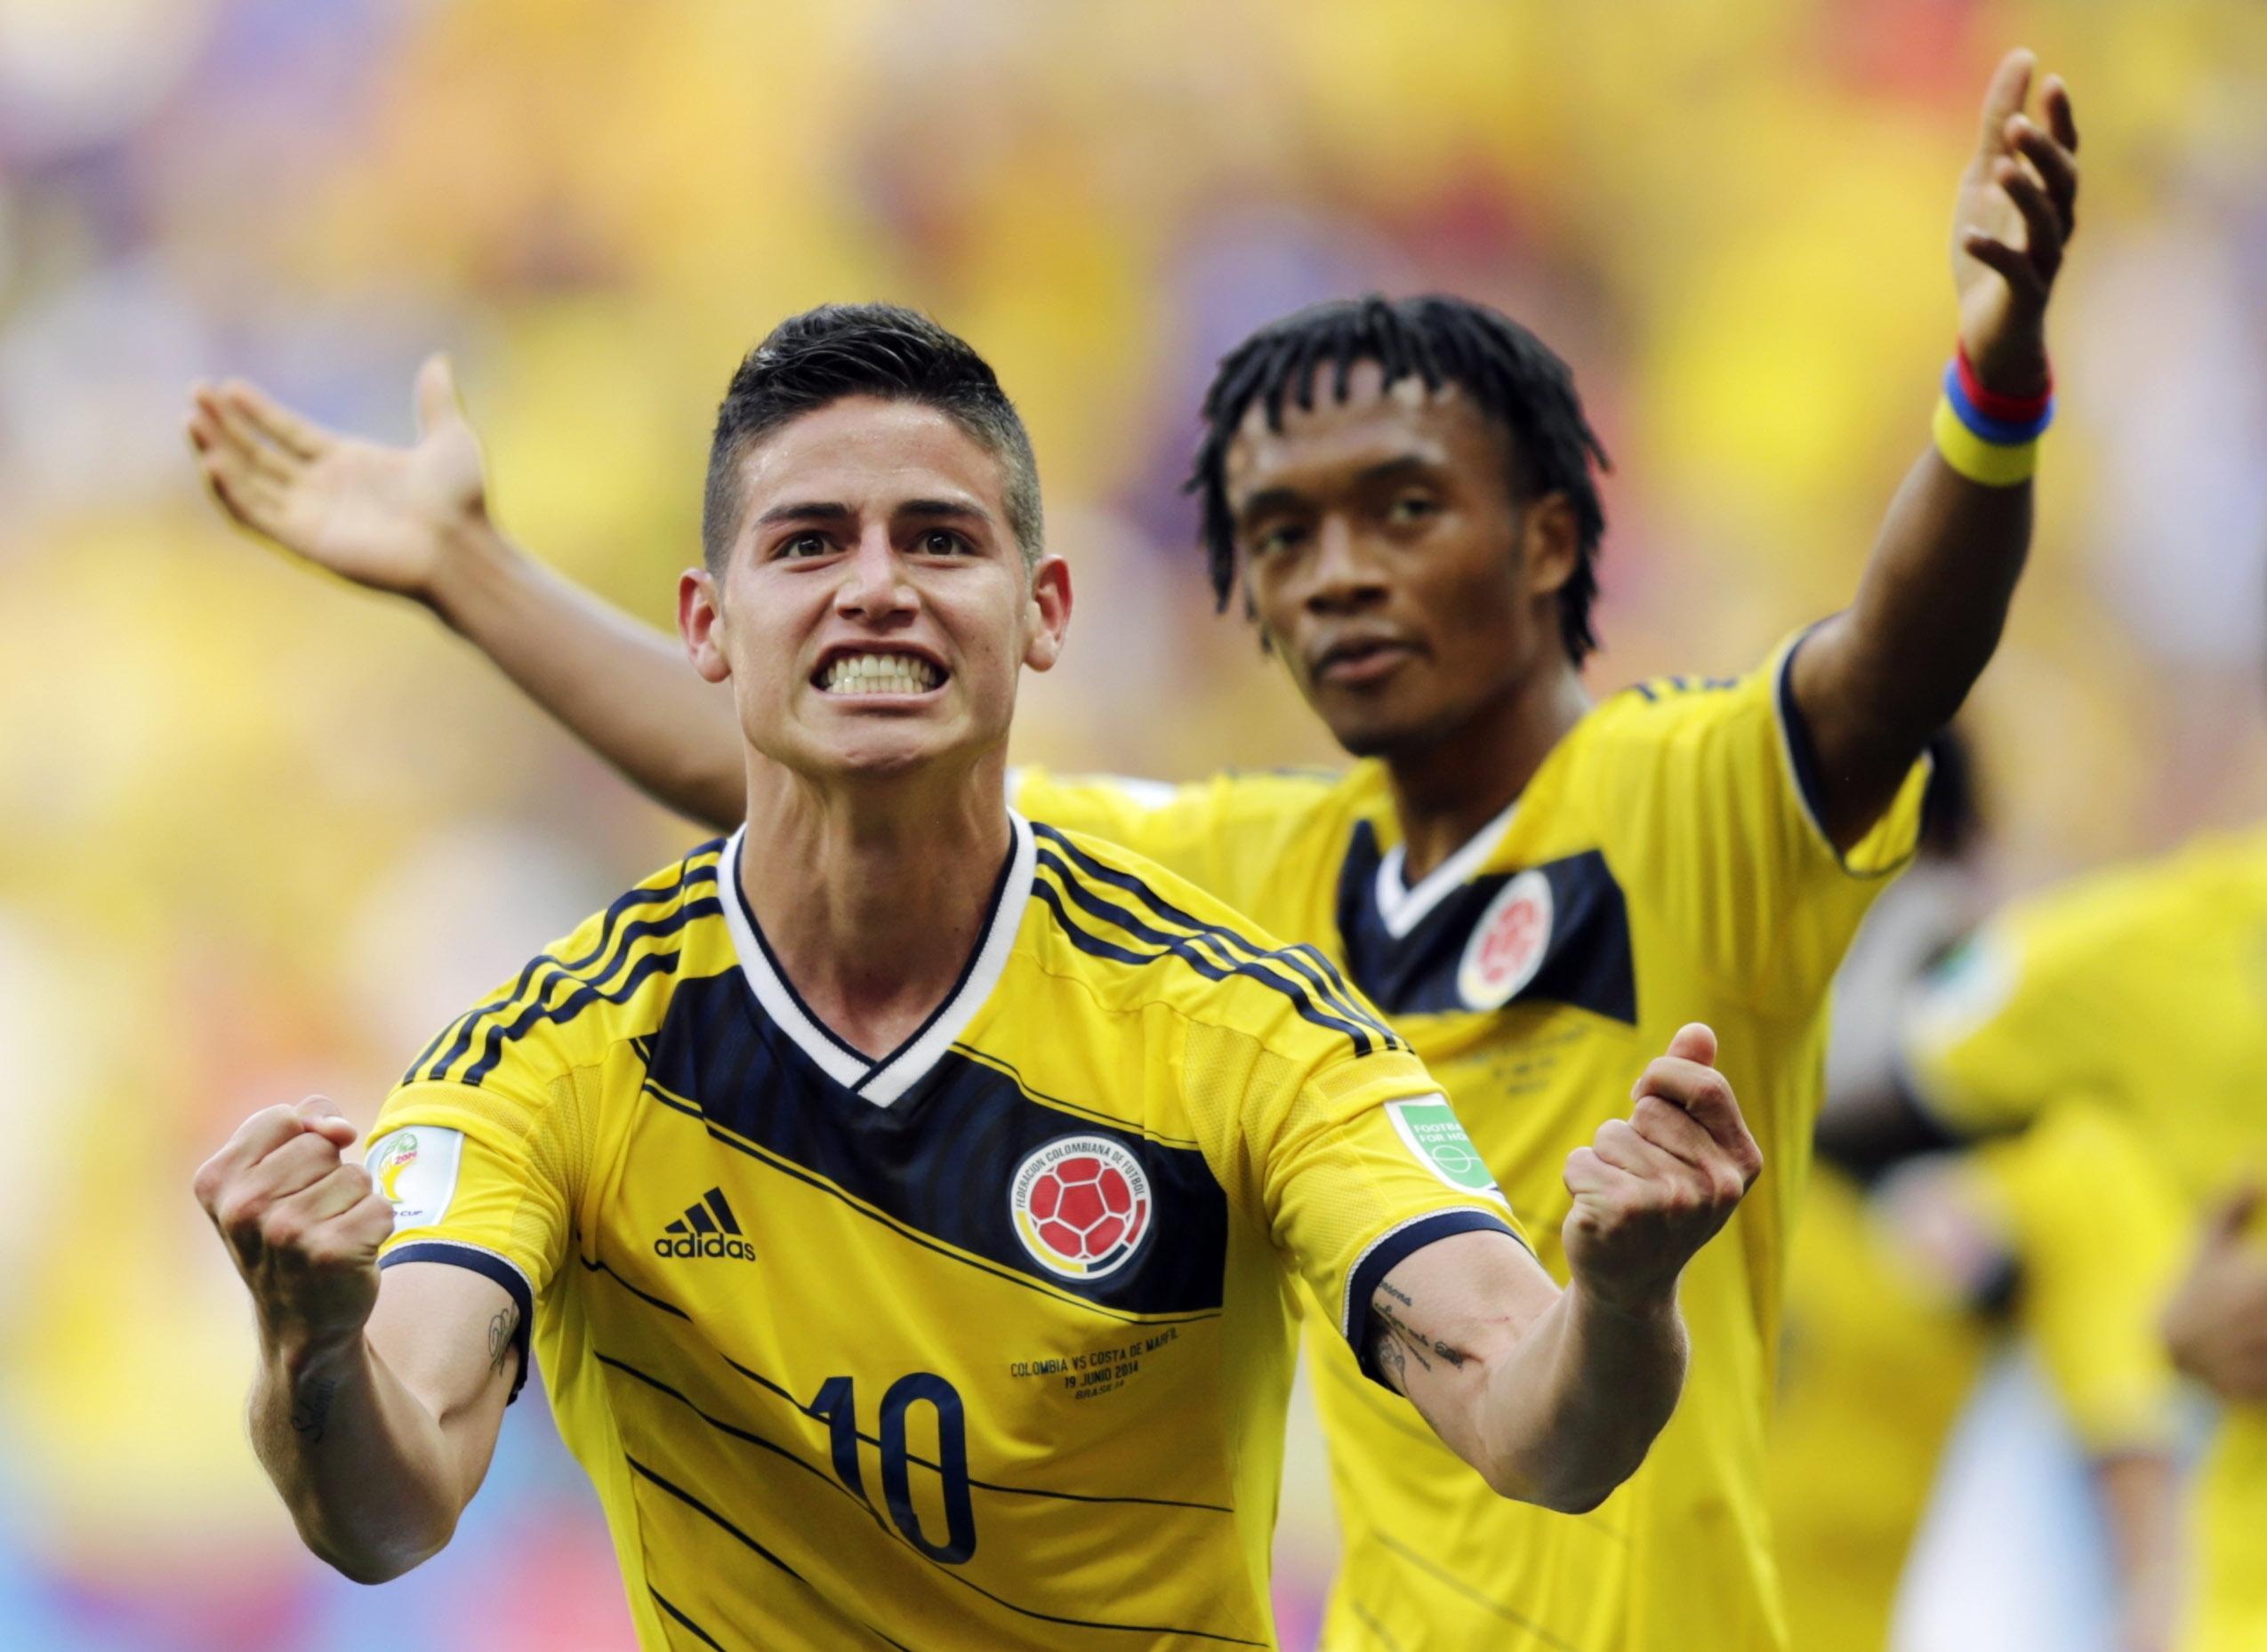 Chelsea Sign Colombian Speedster Cuadrado, Off Load Schuerrle